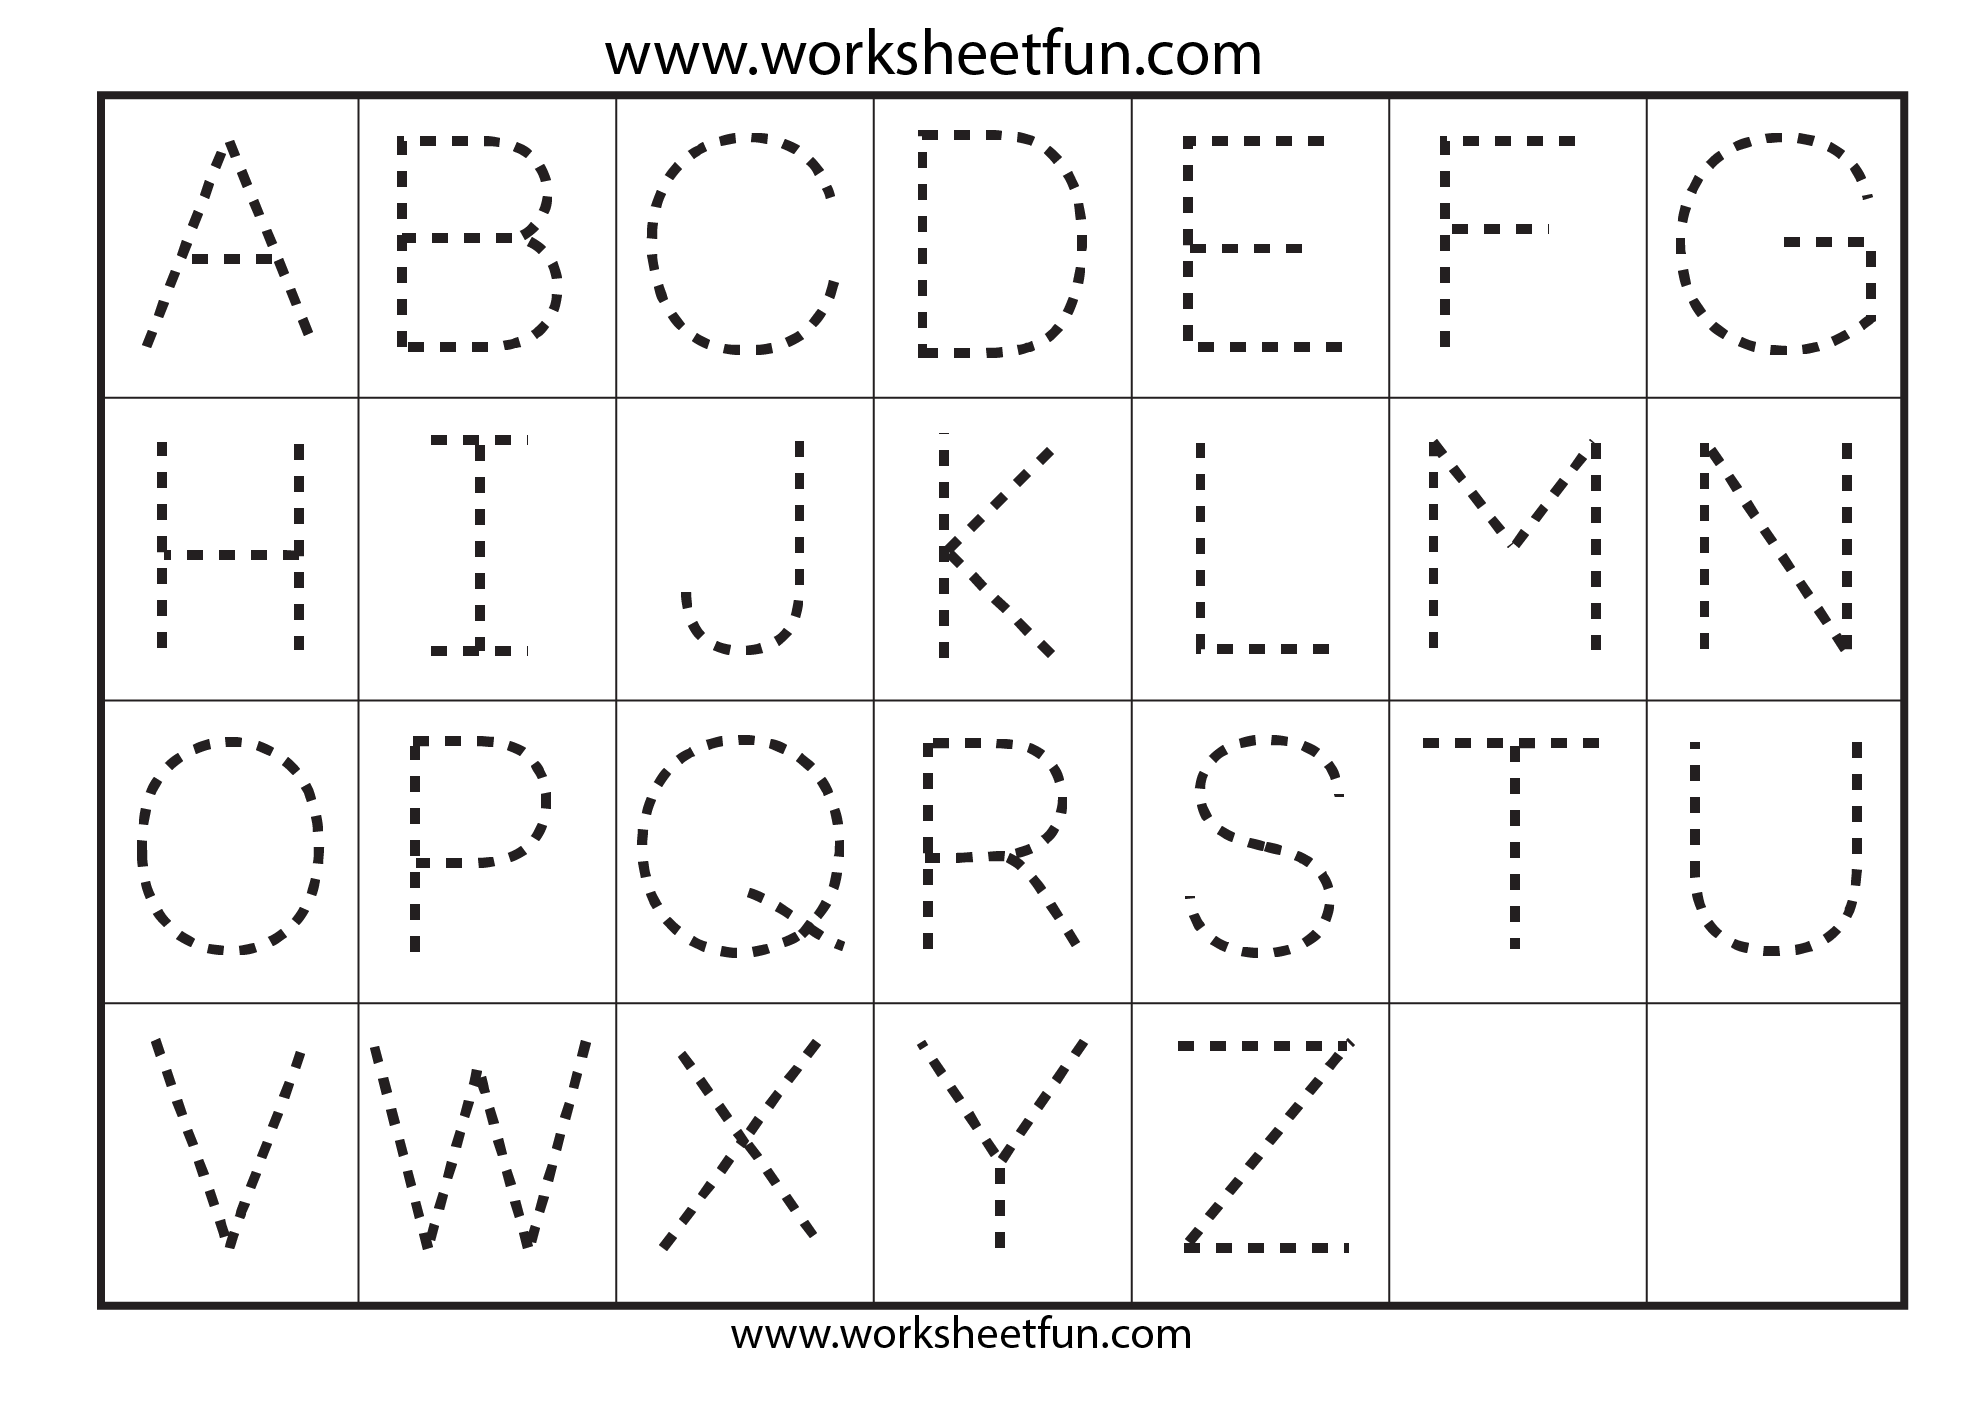 Preschool Worksheets Alphabet Tracing Letter A | Tracing